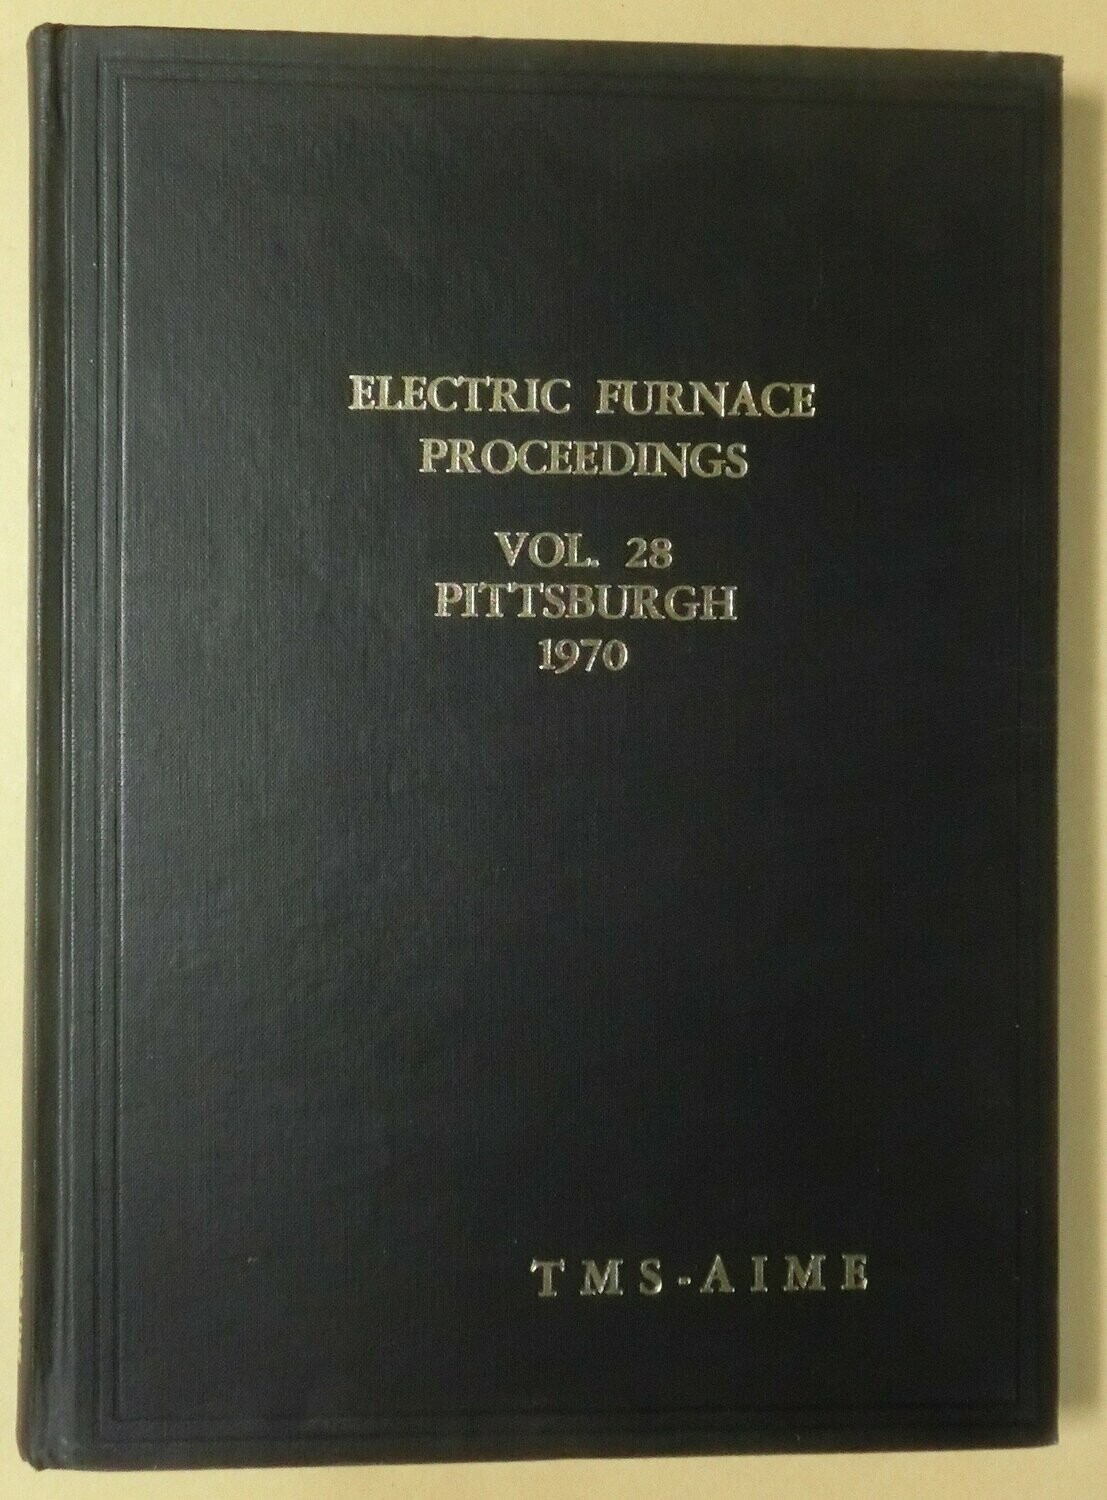 Electric furnace proceedings vol 28 Pittsburgh 1970